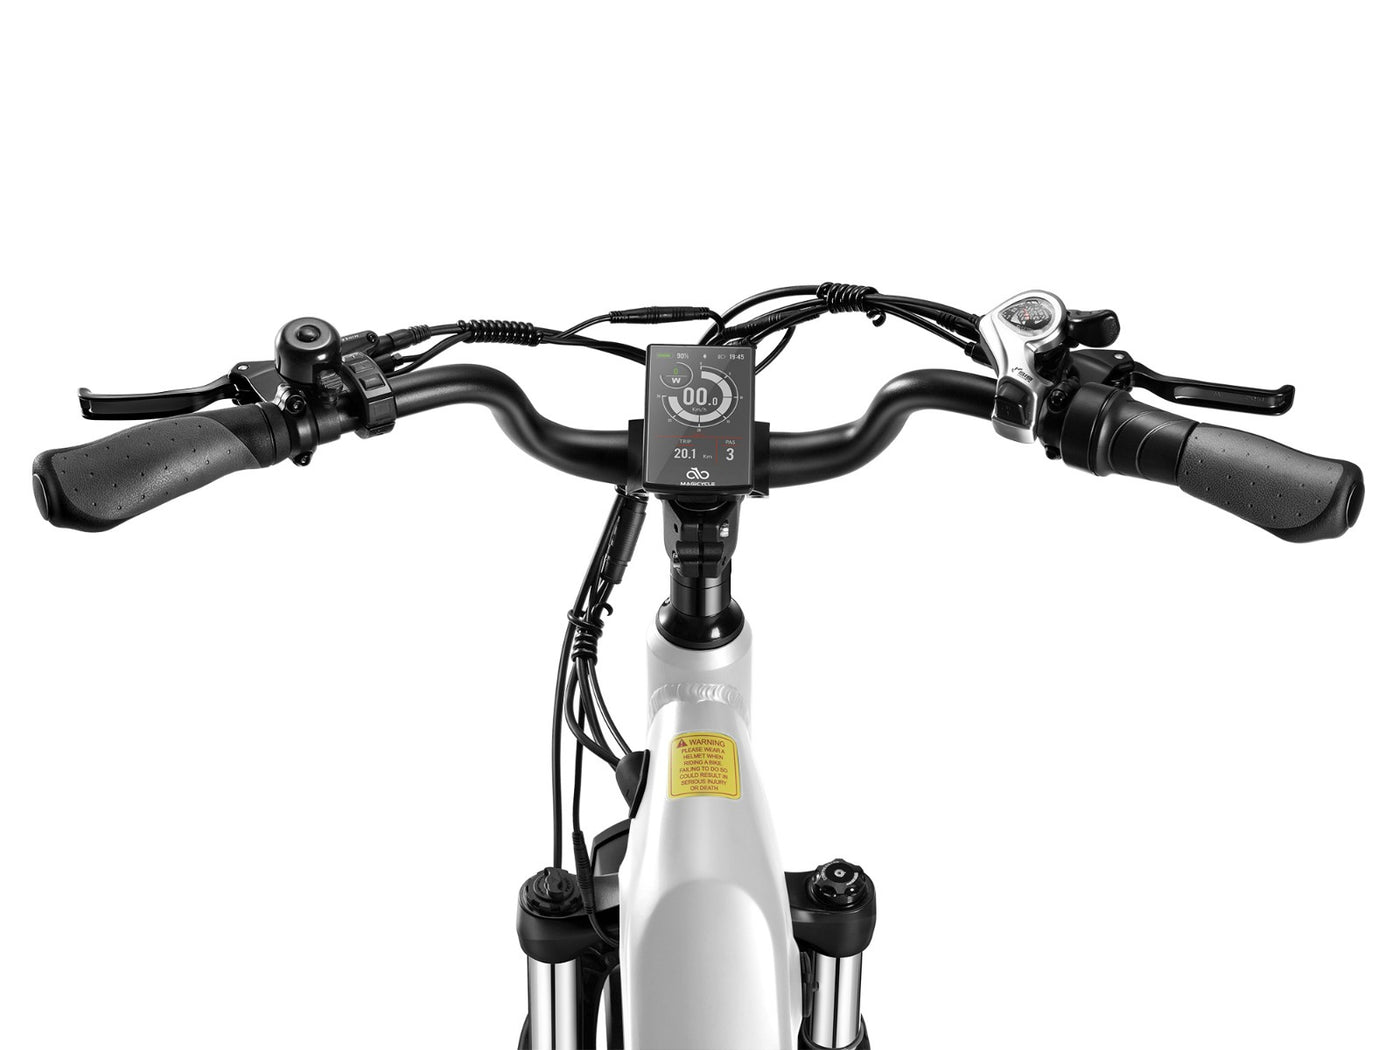 MAGICYCLE Ocelot Pro Long Range Step Thru Fat Tire - Electric Bike